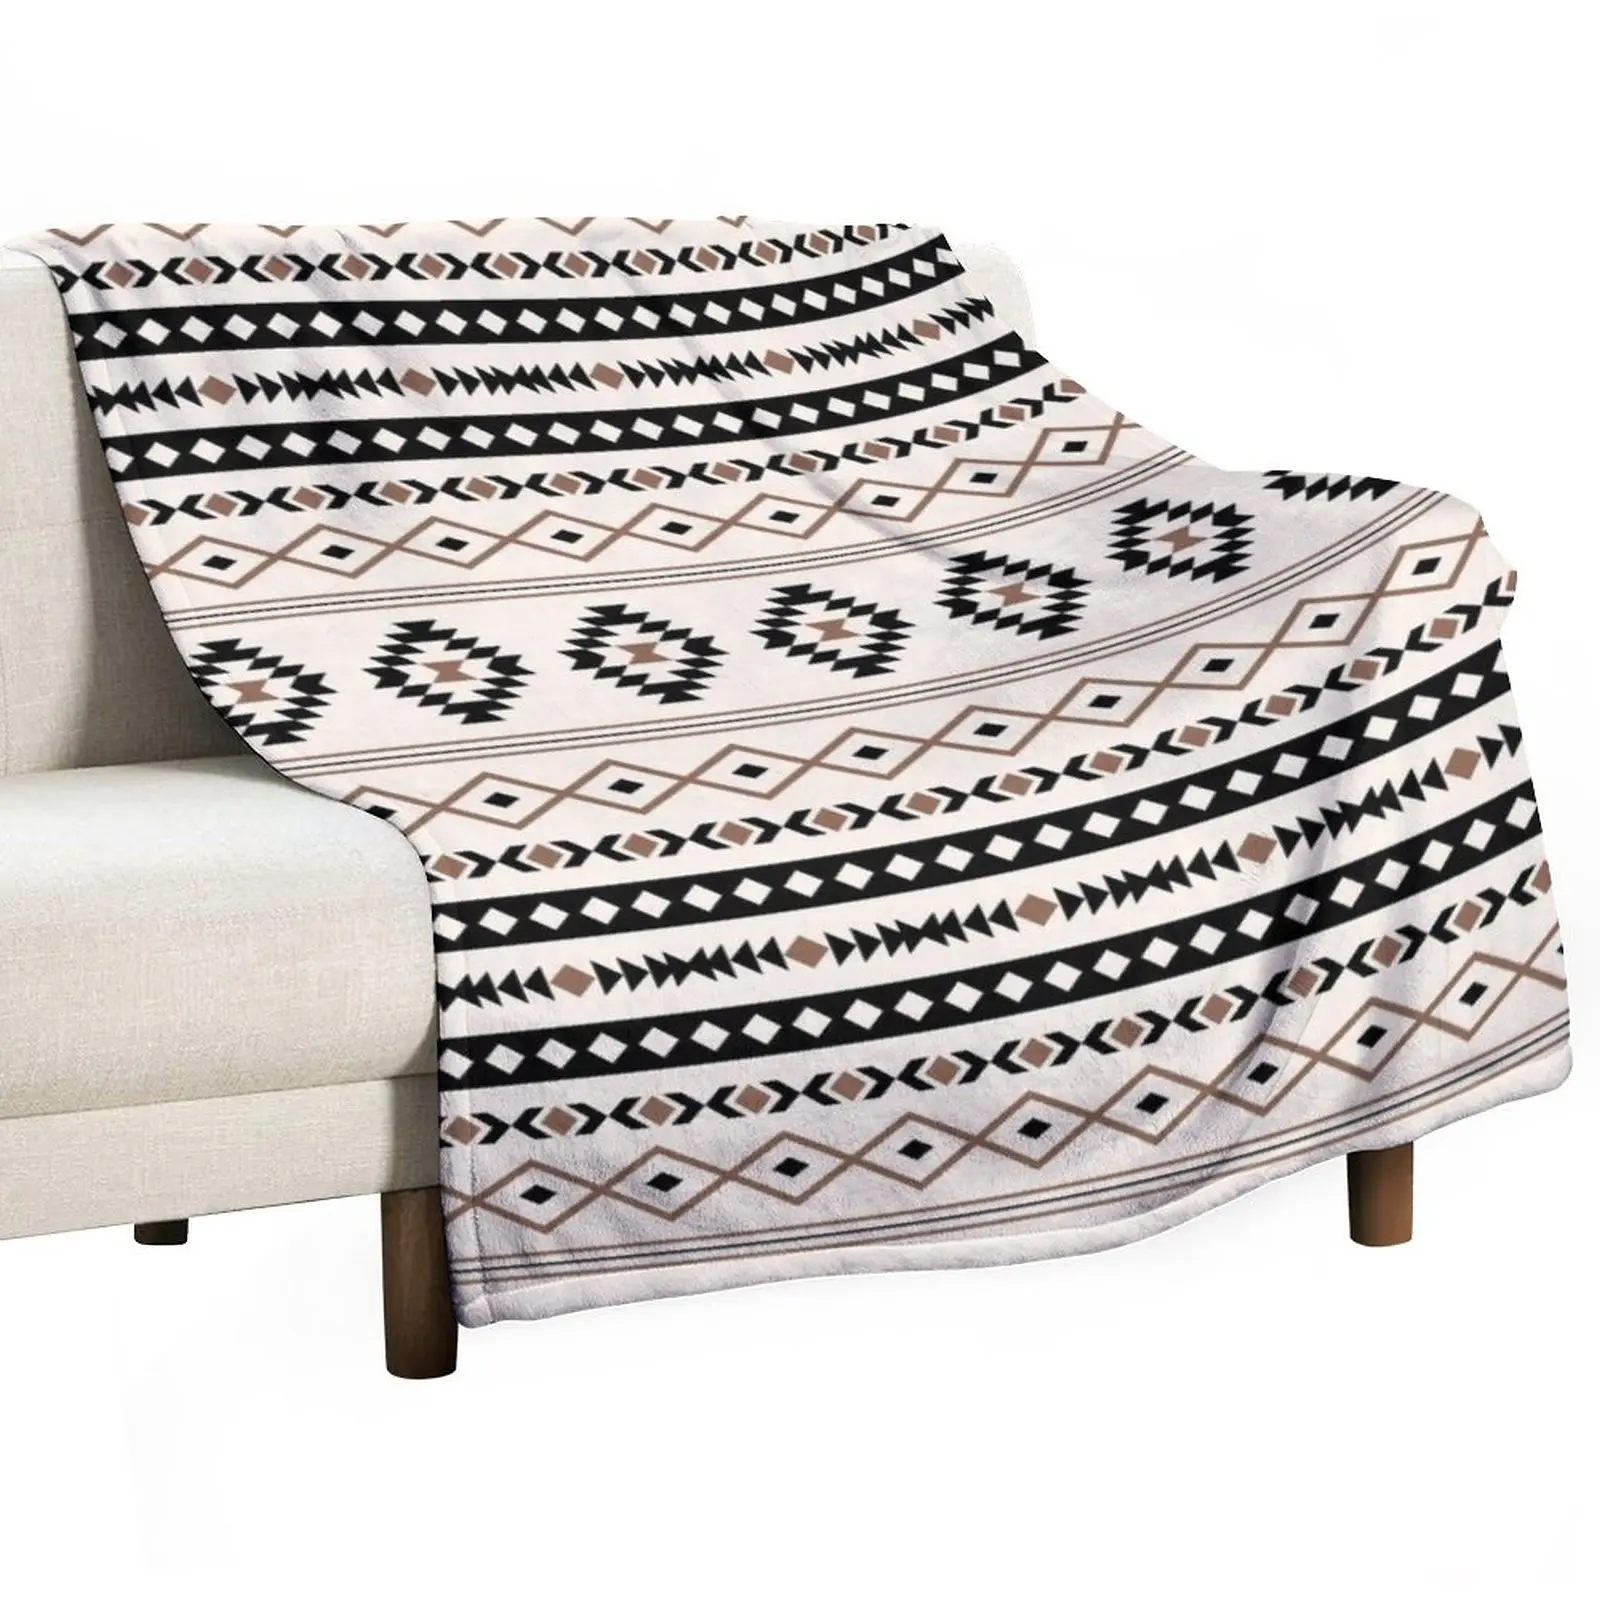 

Aztec Black Brown Cream Mixed Motifs Pattern Throw Blanket Vintage Blanket Thin Blankets Luxury Blanket